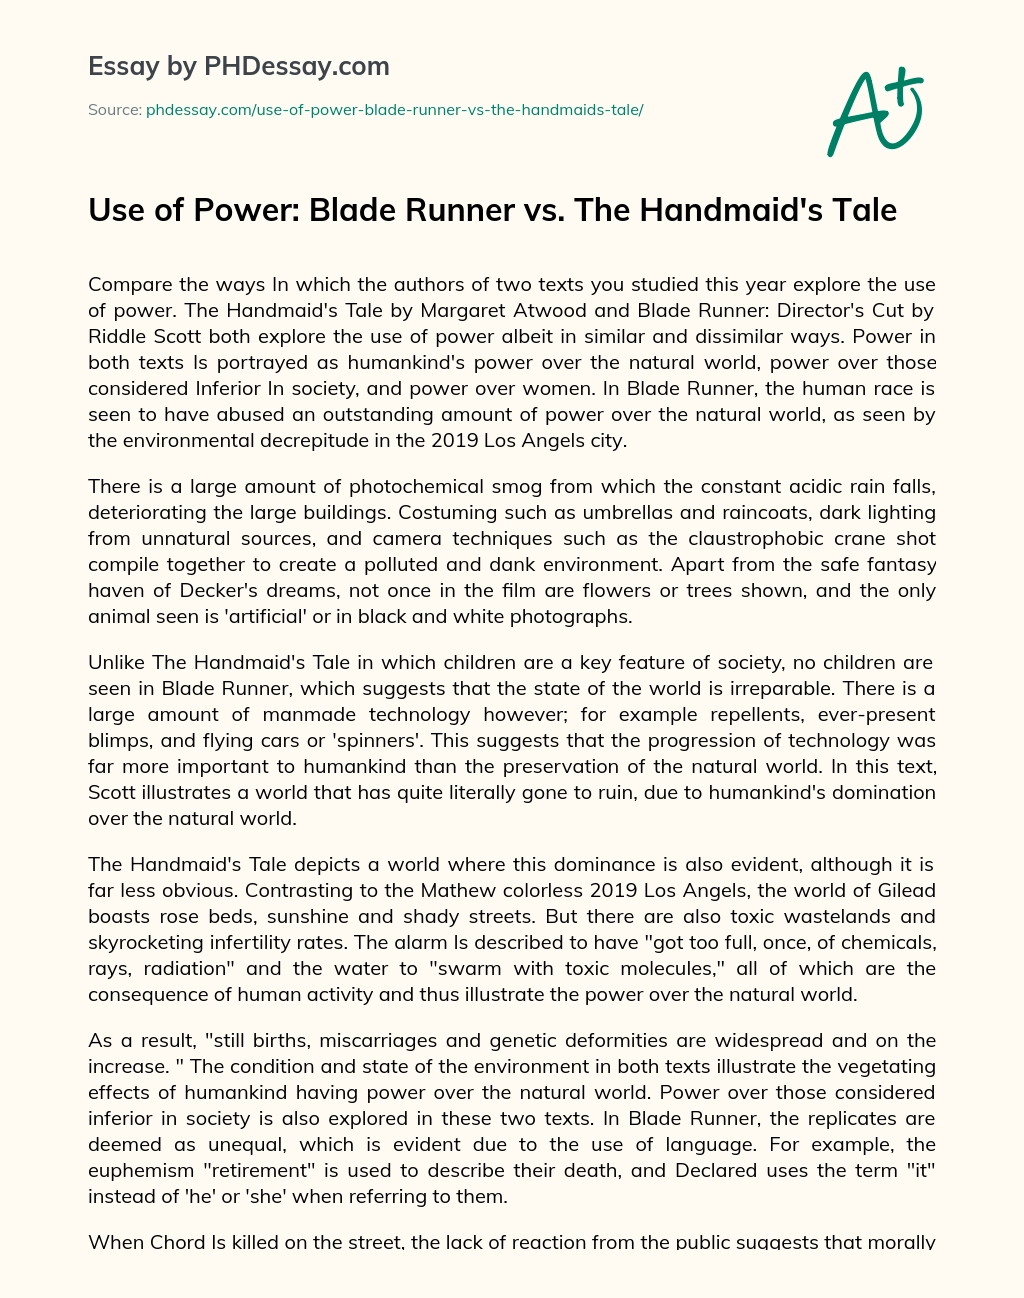 Use of Power: Blade Runner vs. The Handmaid’s Tale essay